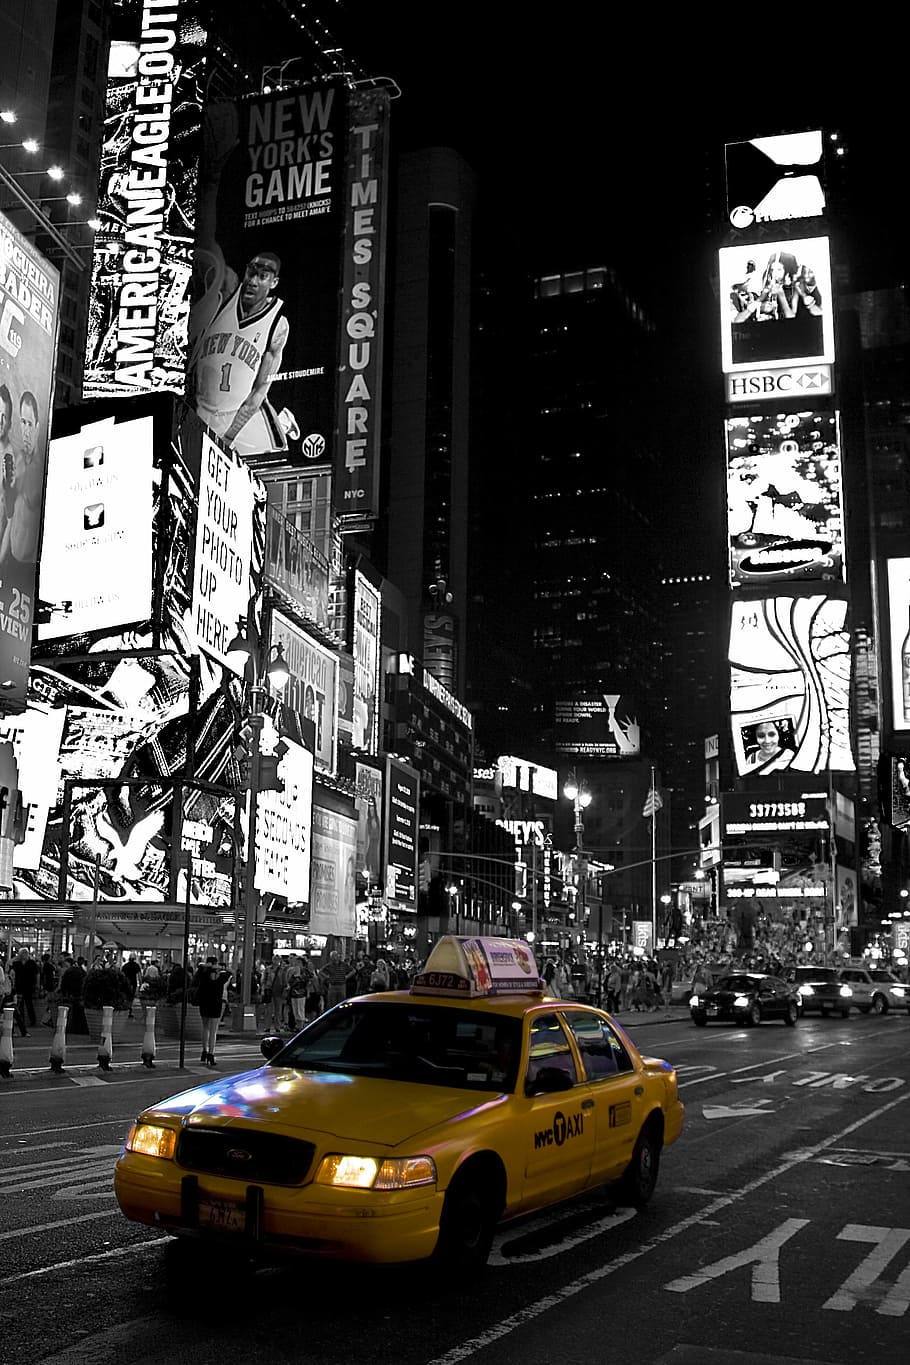 Nueva York, Tiempo, Time Square, Blanco negro, taxi amarillo, viaje, edificio, negro, taxi, calle